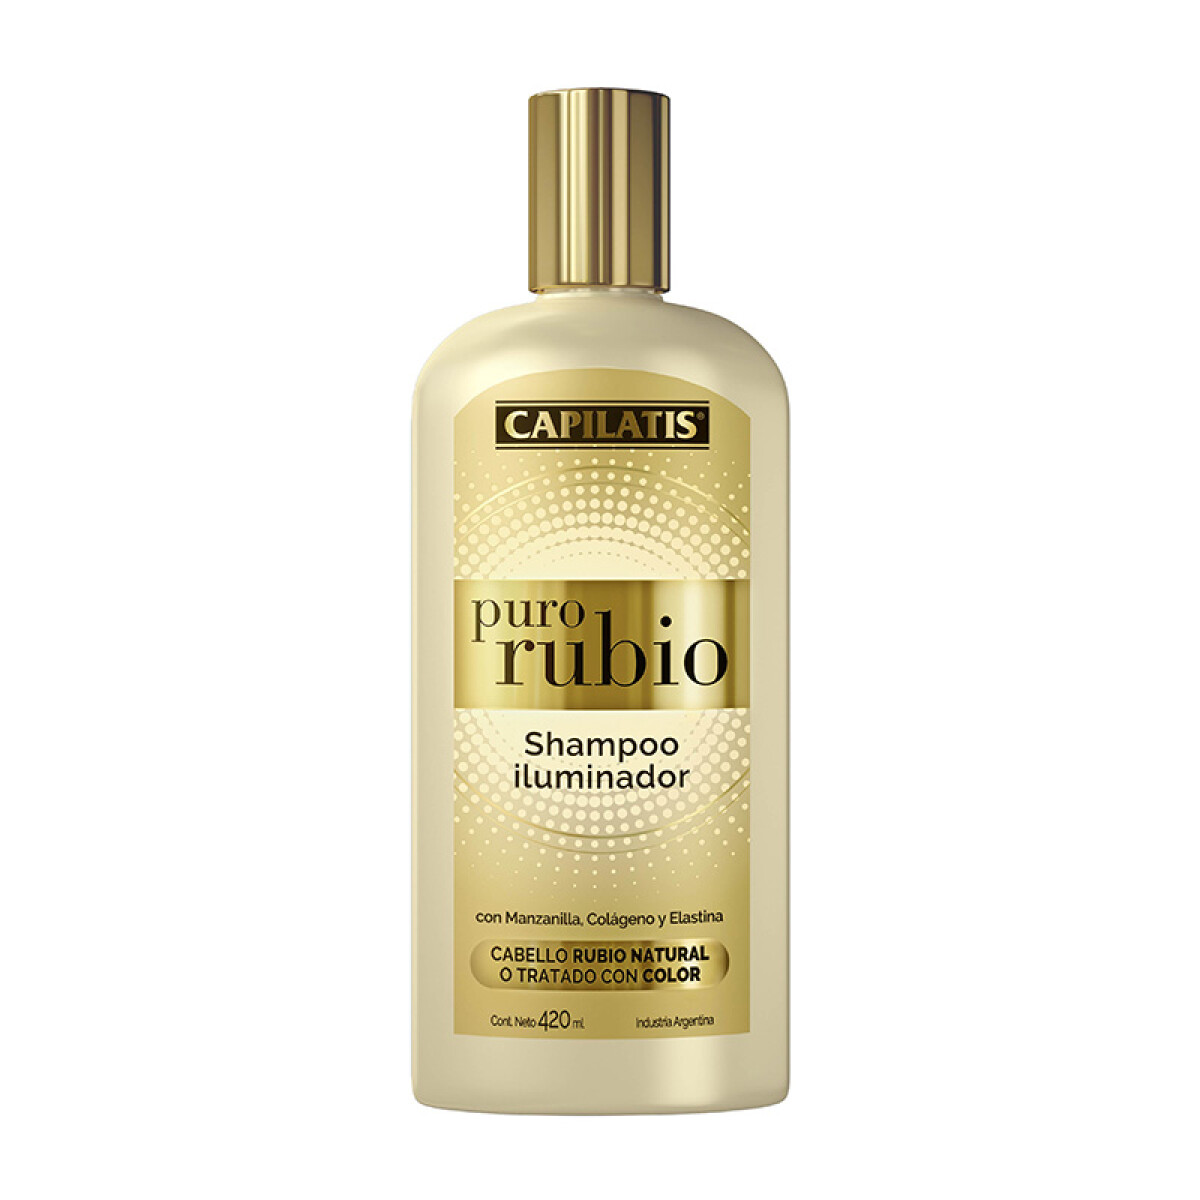 Capilatis Puro Rubio 420 ml - Shampoo 